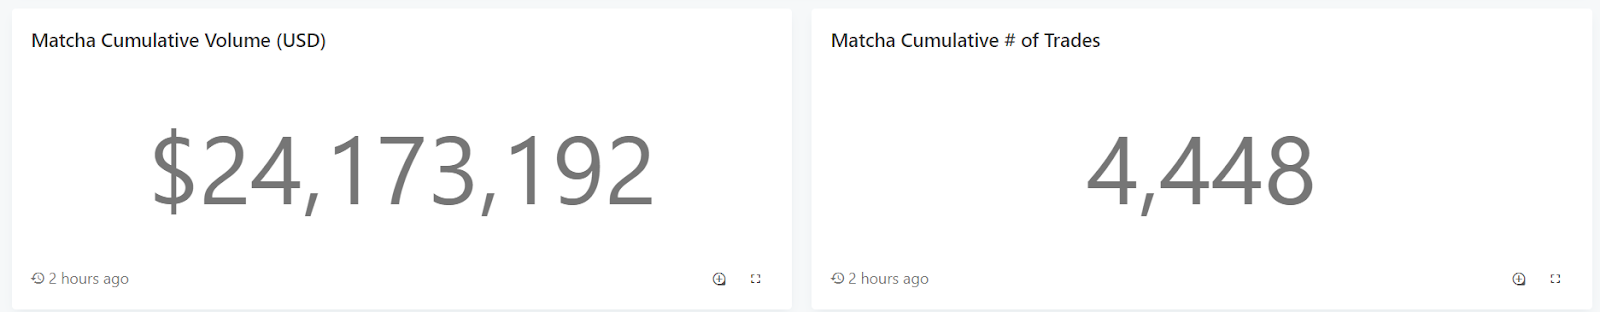 Cumulative Volume on Matcha